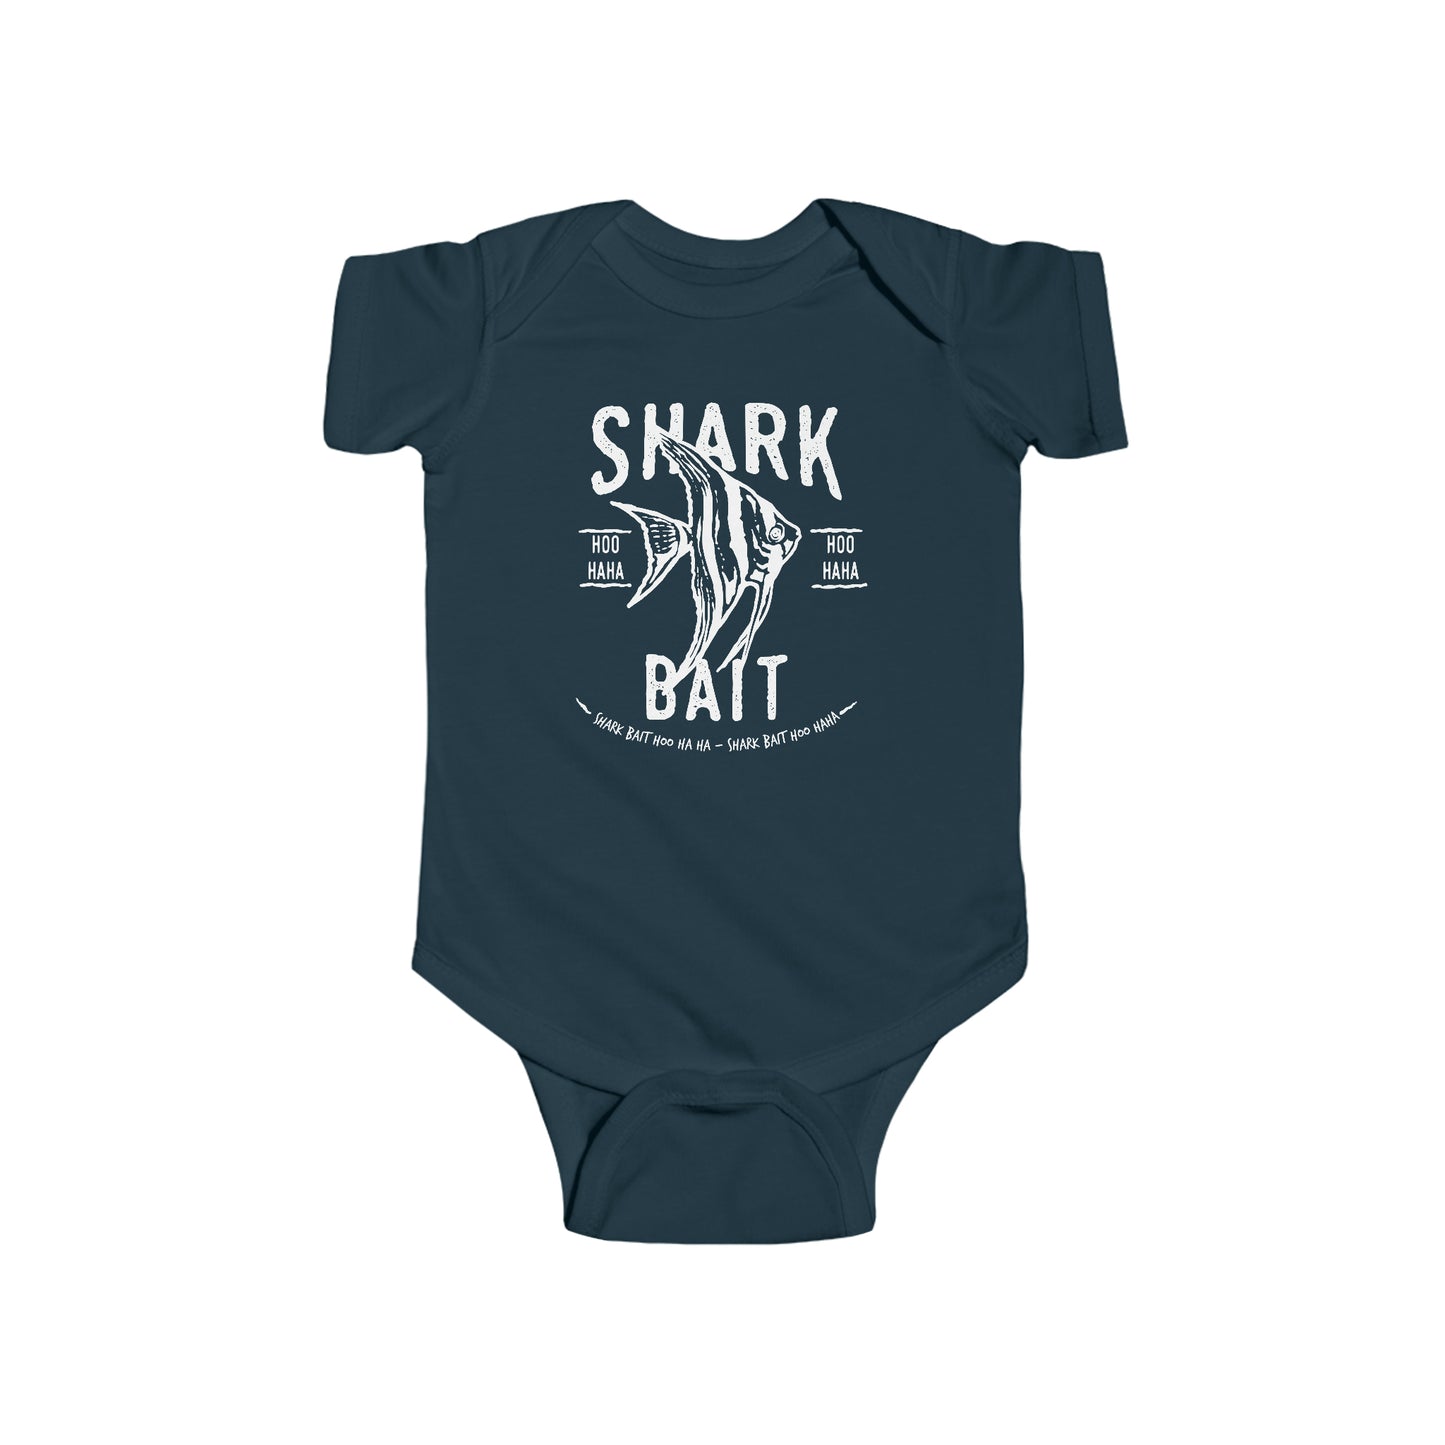 Shark Bait Hoo Haha Rabbit Skins Infant Fine Jersey Bodysuit